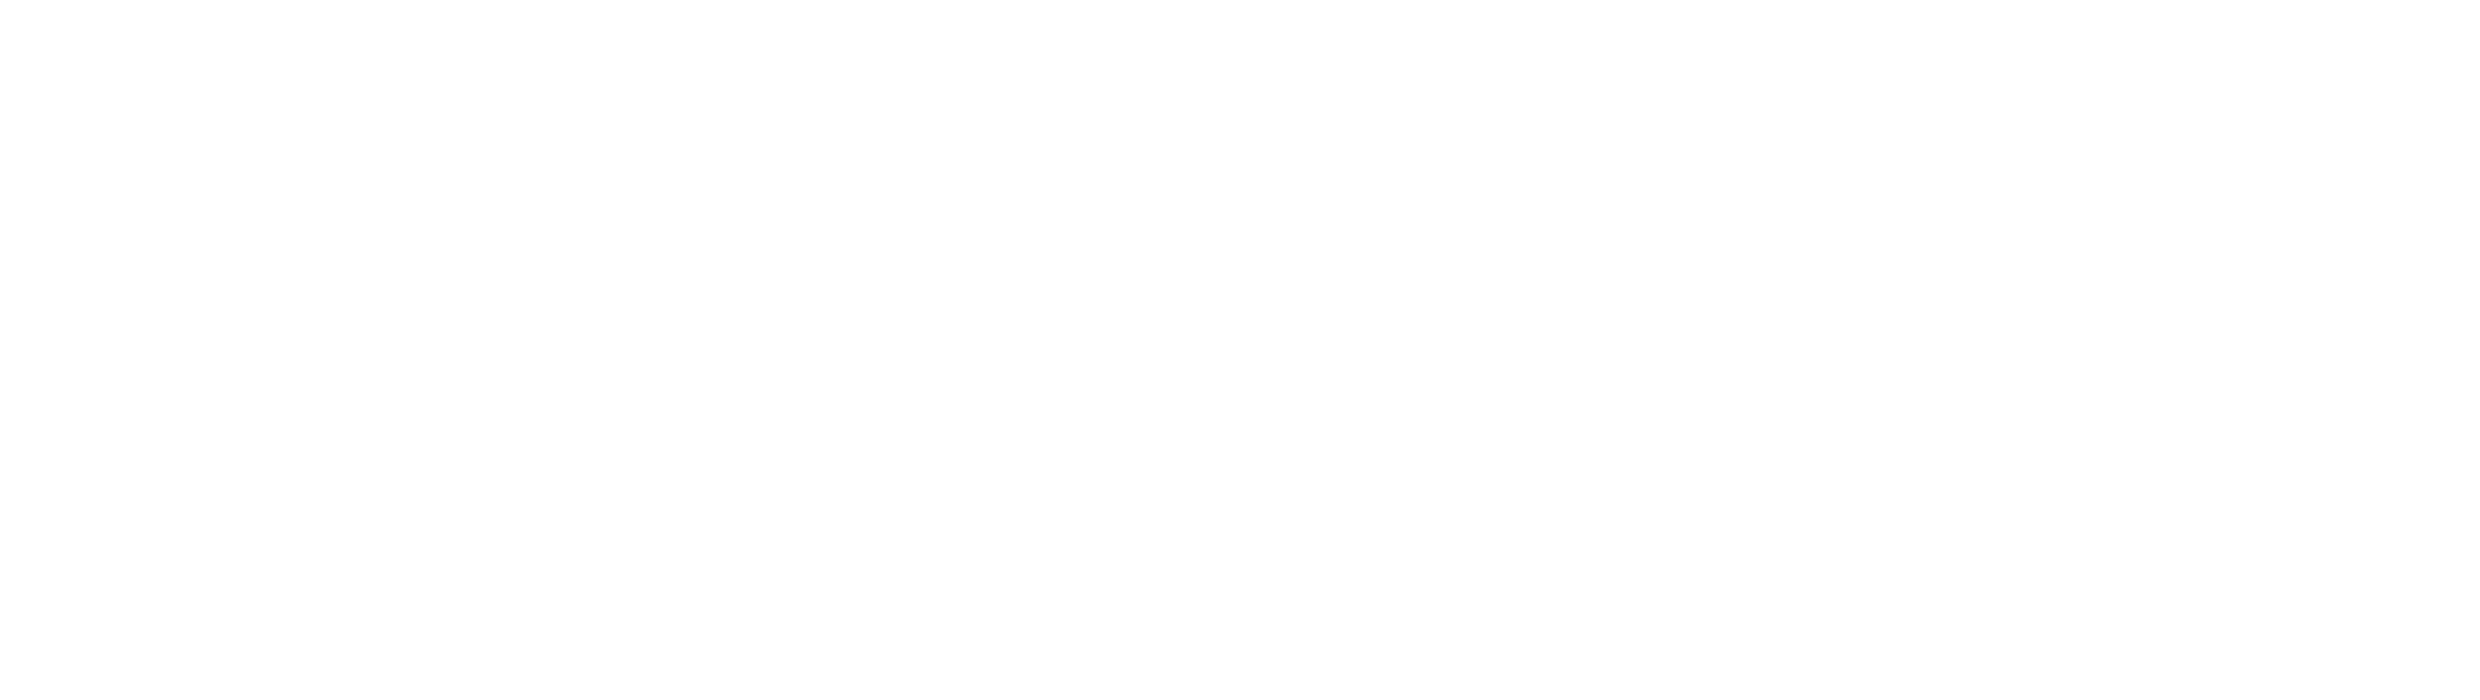 Opera Week